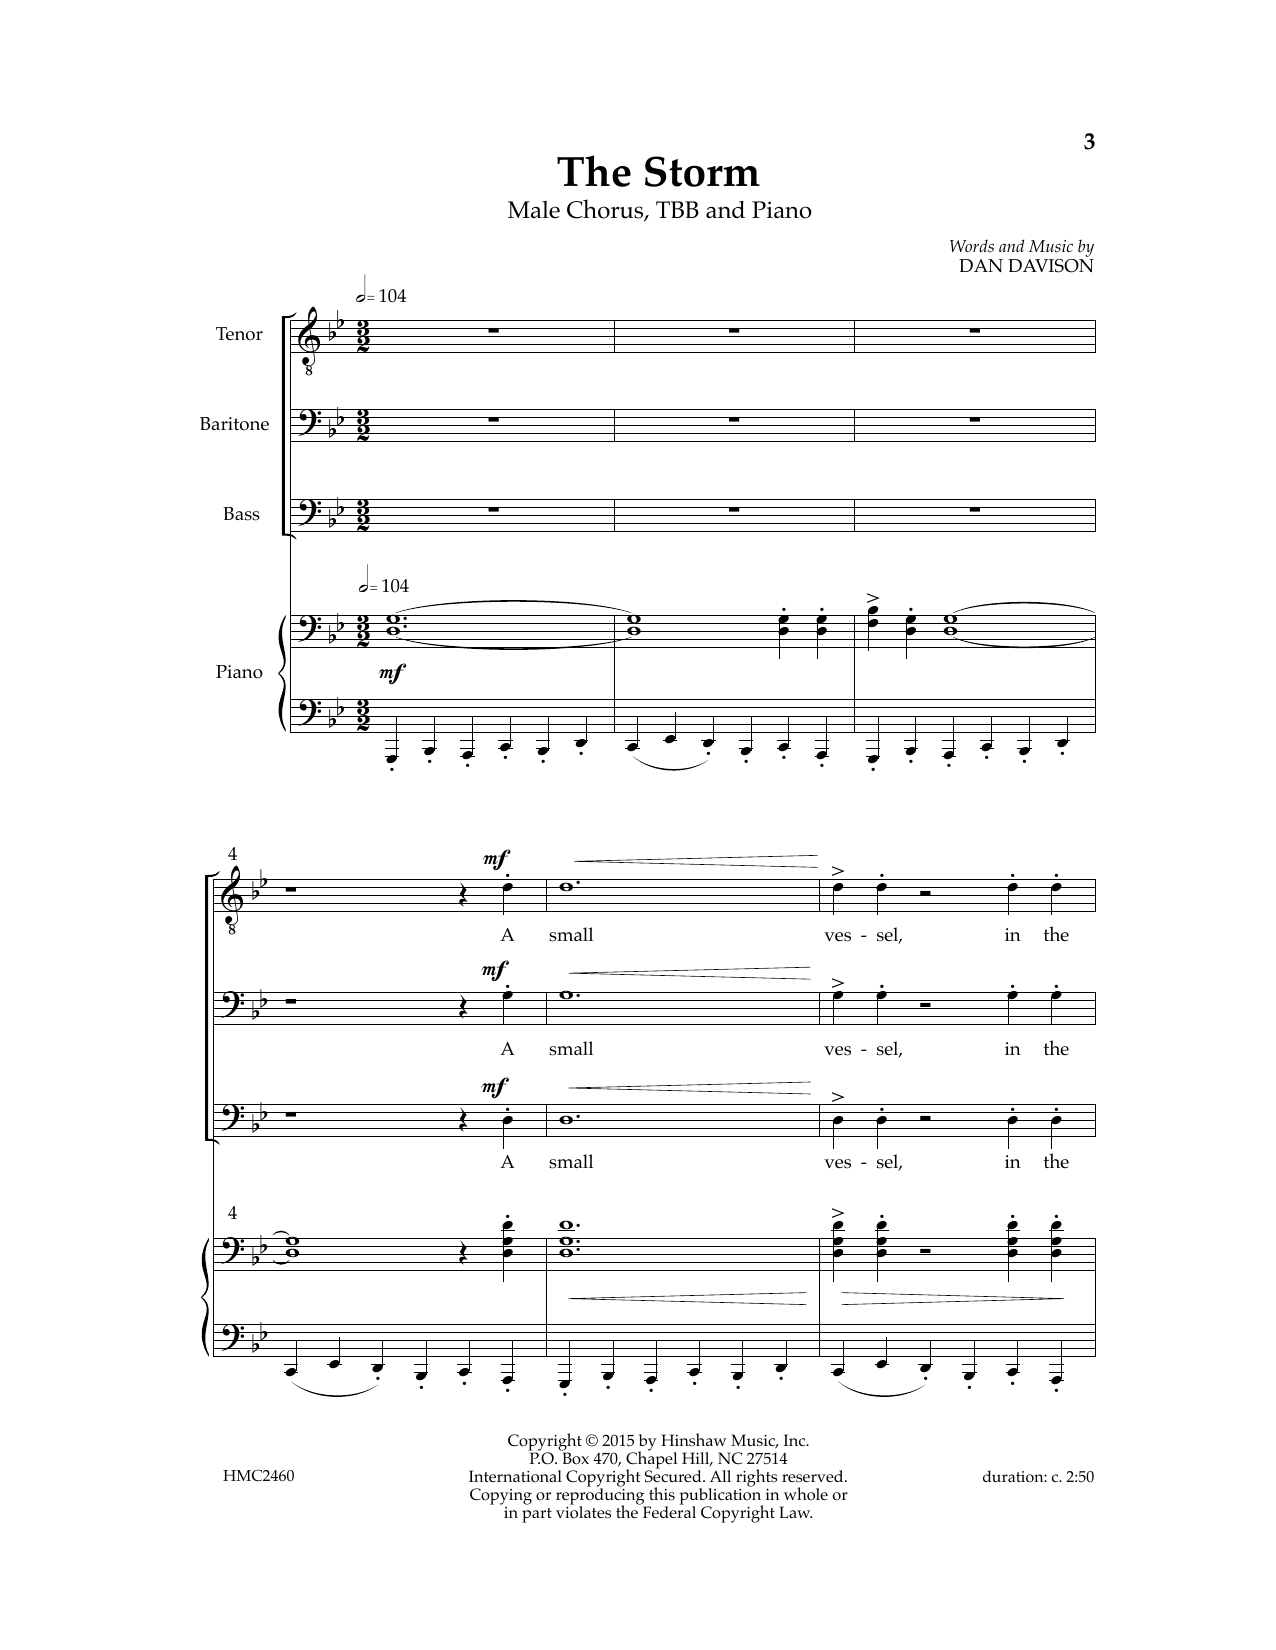 Dan Davidson The Storm Sheet Music Notes & Chords for TBB Choir - Download or Print PDF